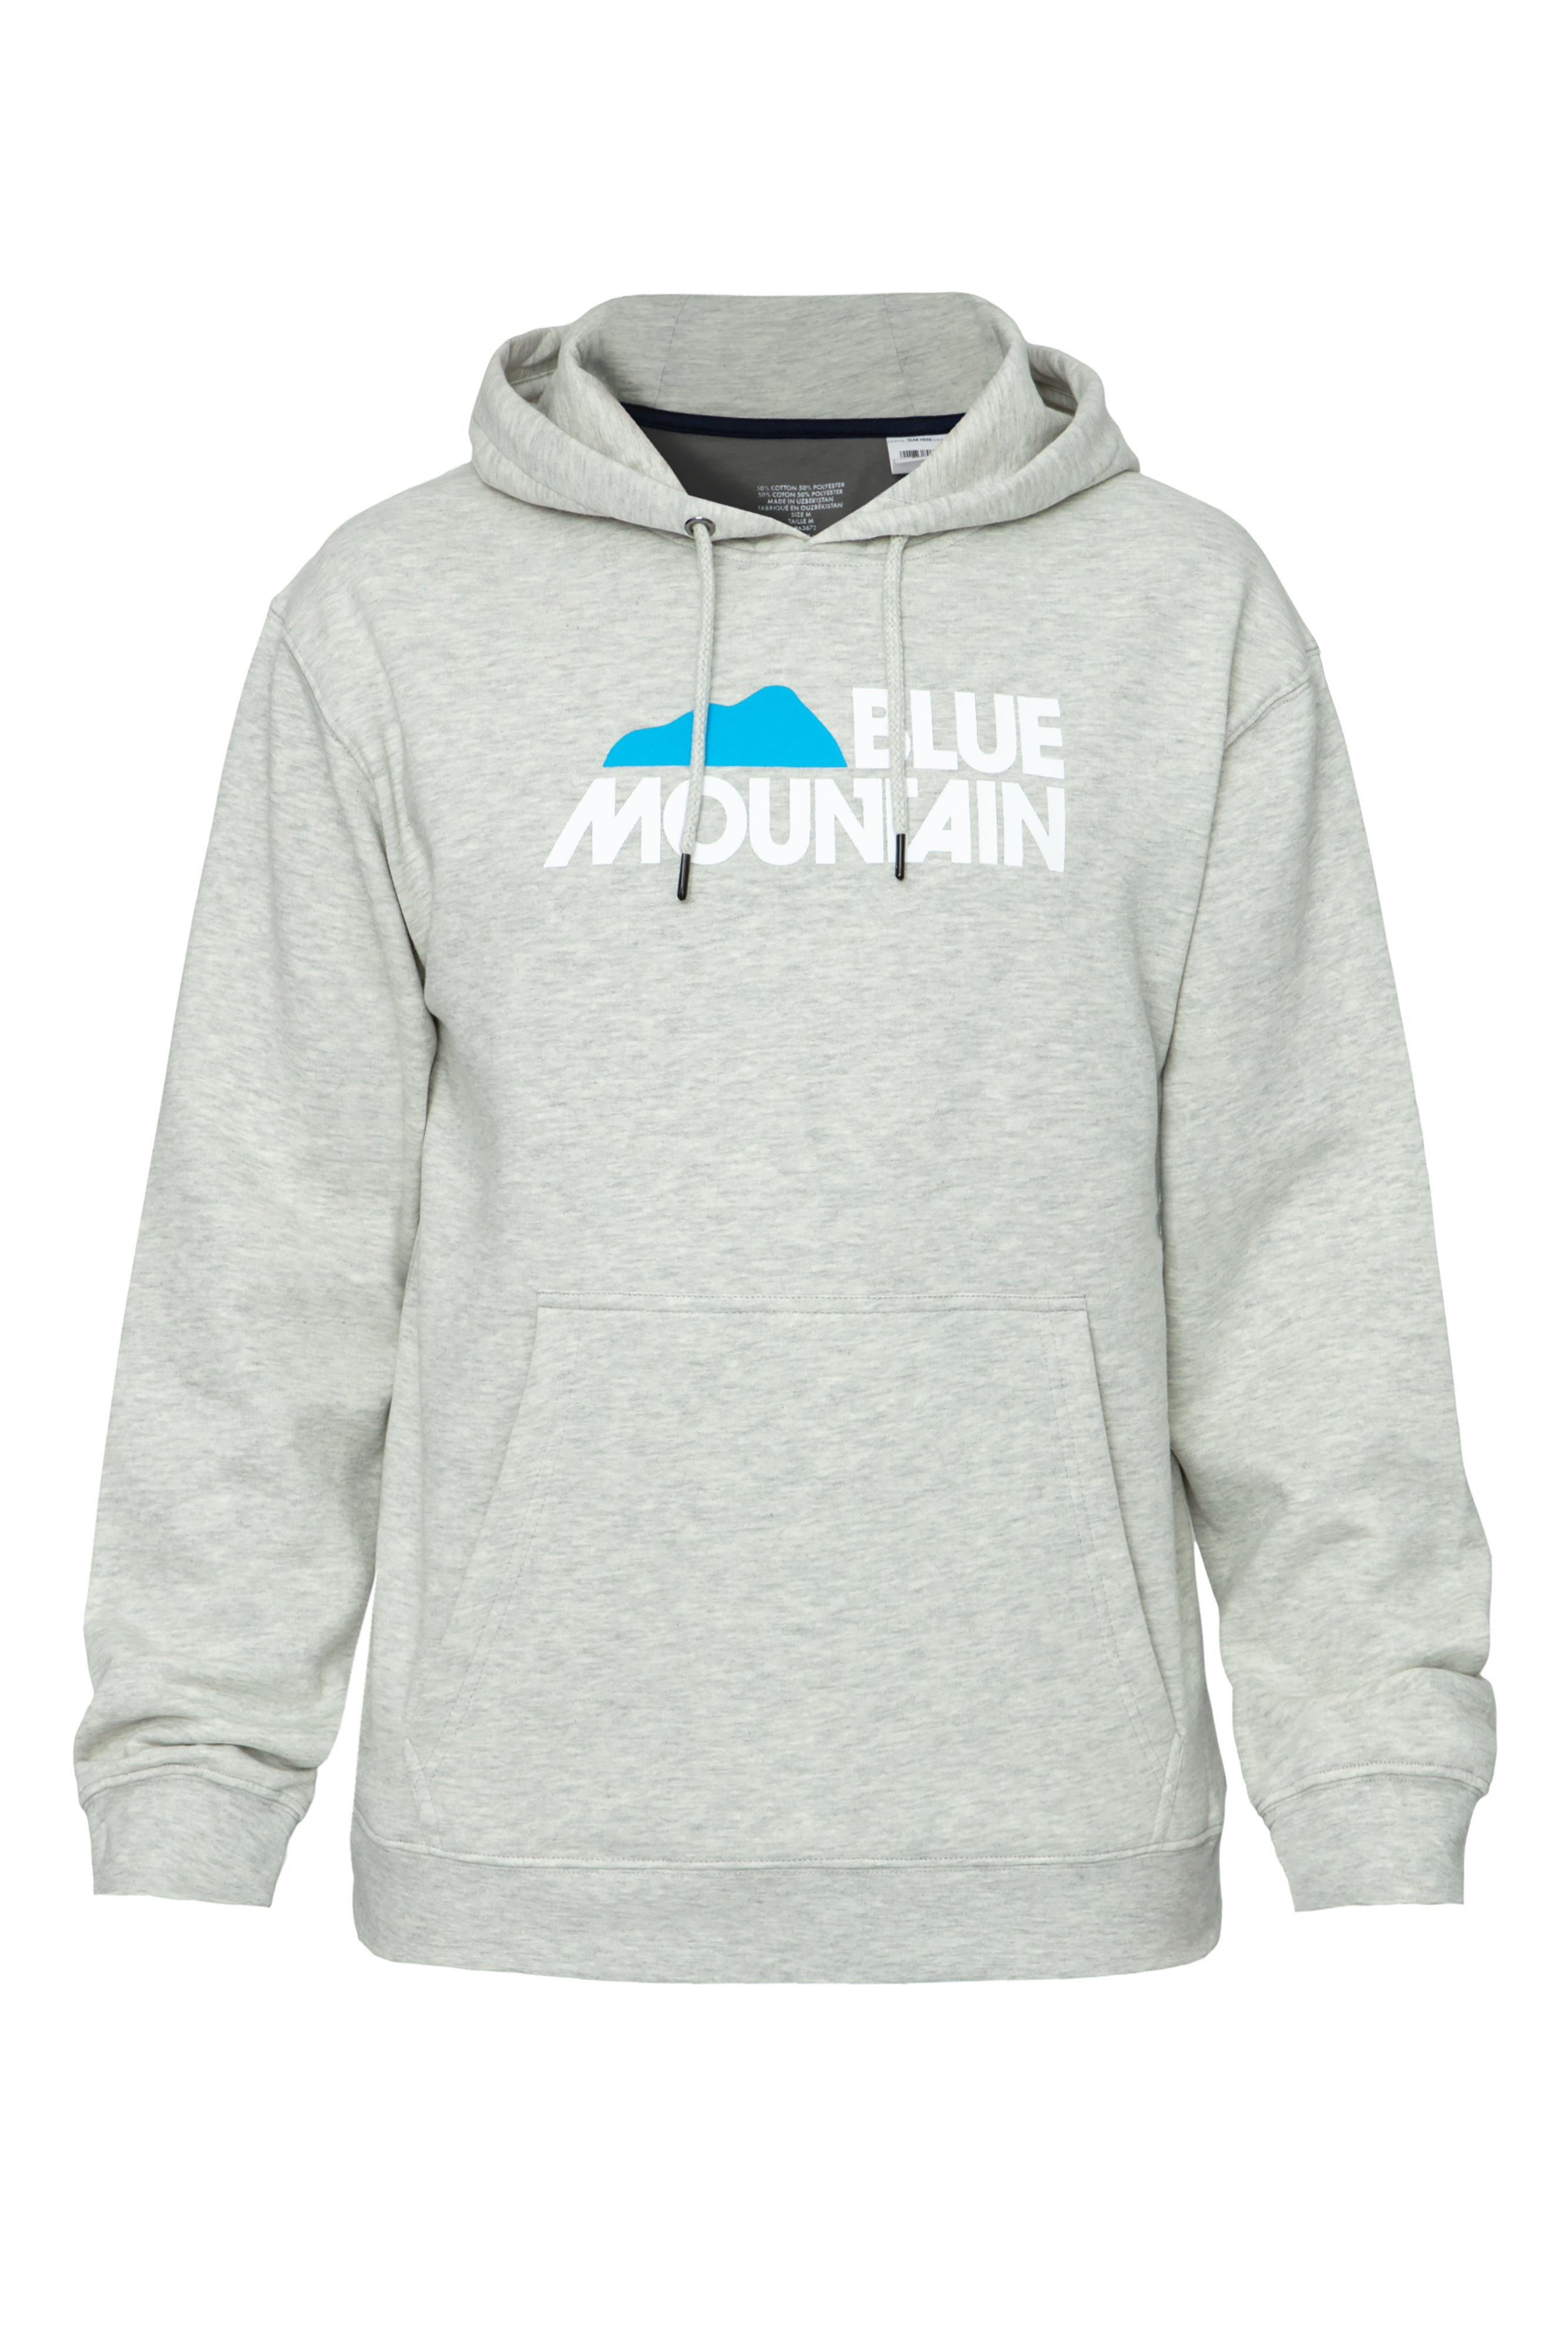 Adult Blue Mountain Logo Hoodie